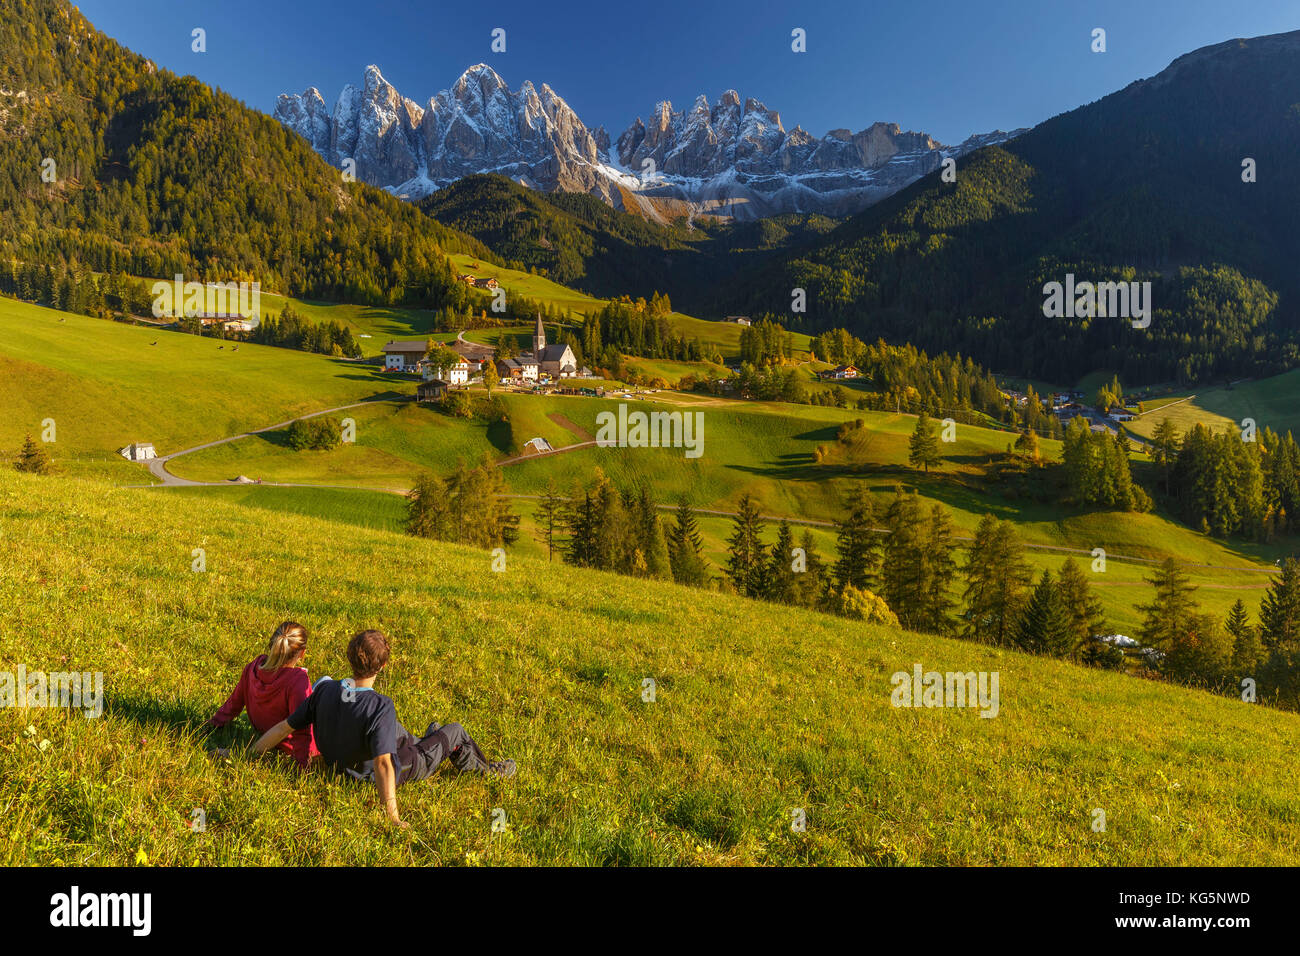 Two brothers admires the village of Santa Magdalena, Funes valley, Odle dolomites, South Tyrol region, Trentino Alto Adige, Bolzano province, Italy, Europe Stock Photo